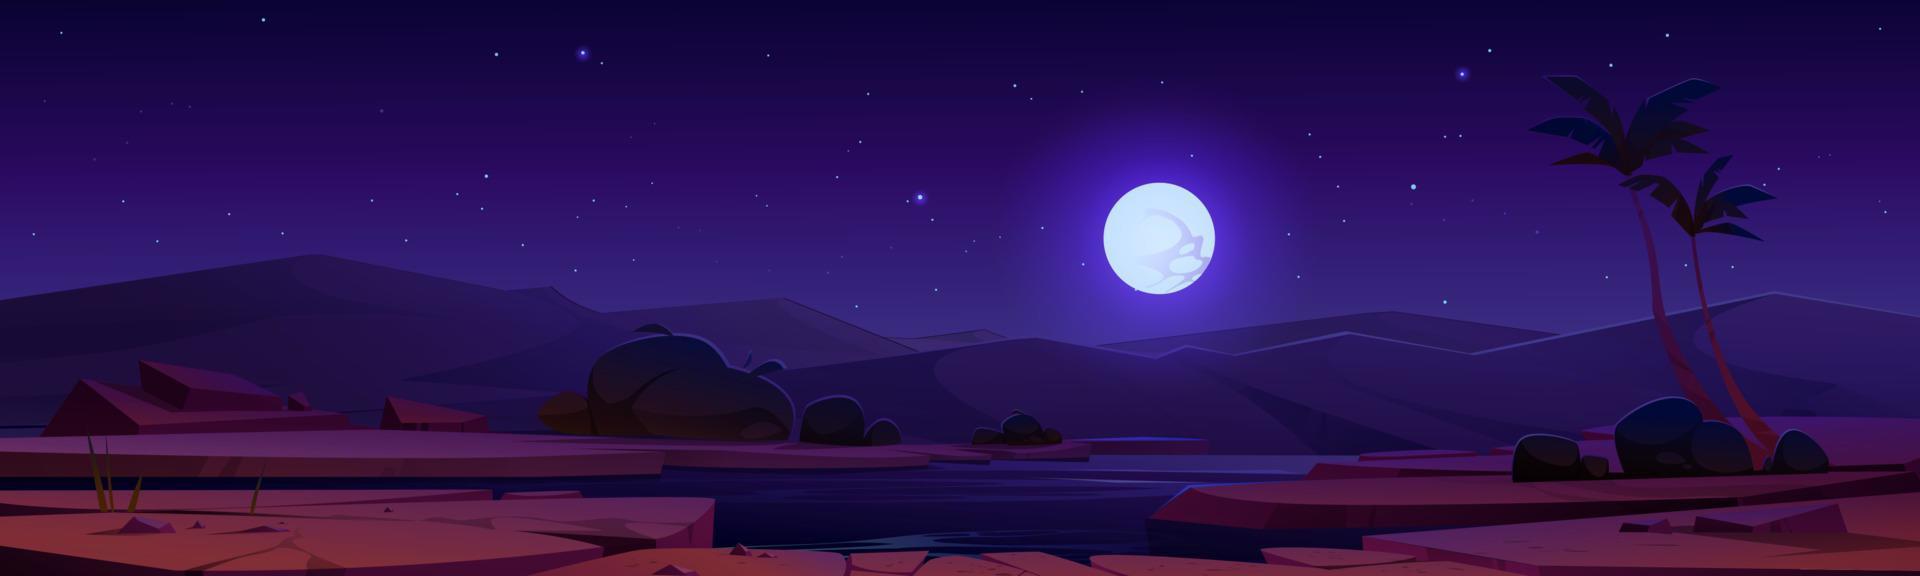 natt öken- oas under full måne starry himmel vektor